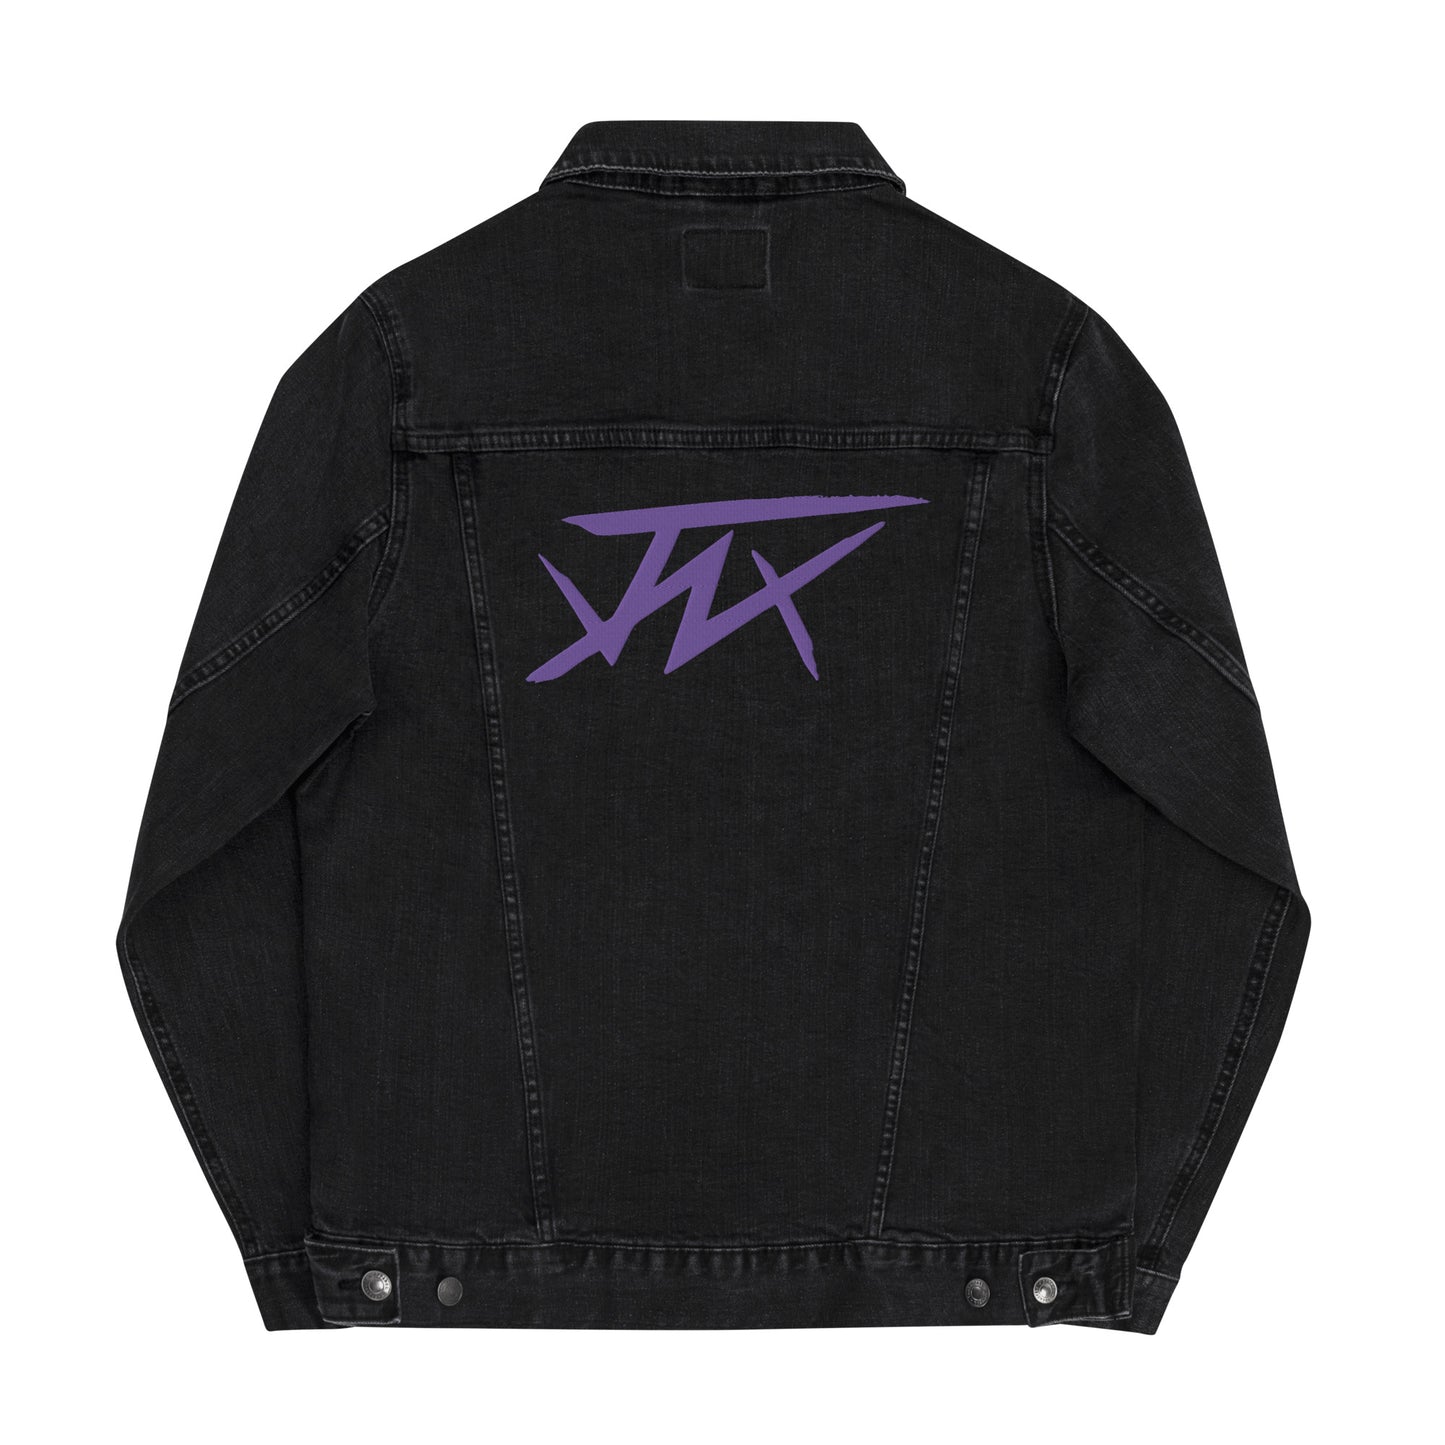 JNX Purple Flame Skull Denim Jacket